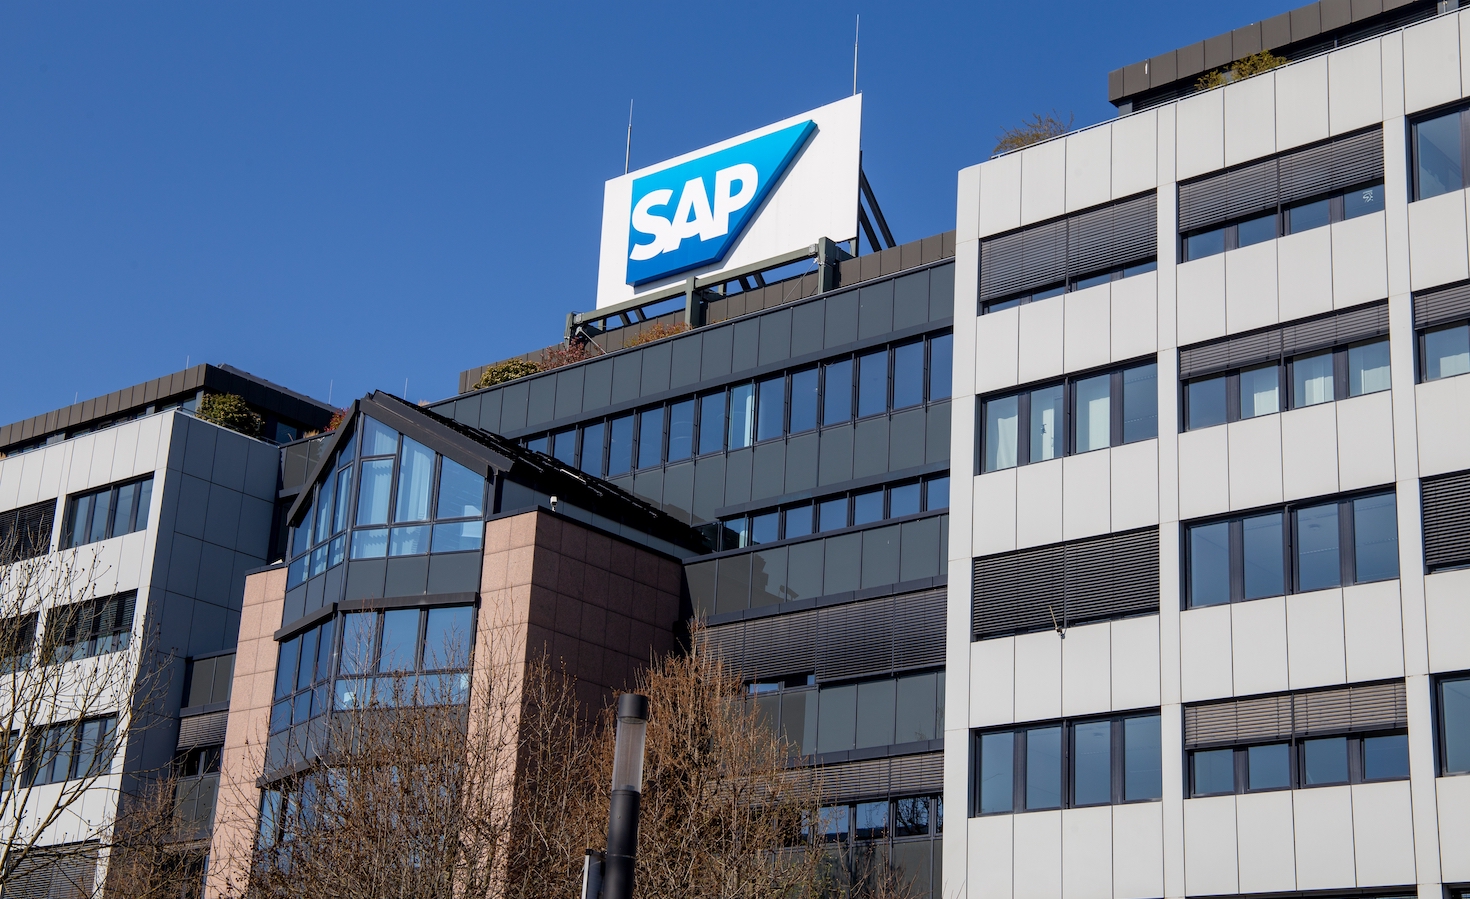 Enterprise software program heavyweight SAP embeds ‘inexperienced ledger’ into core apps